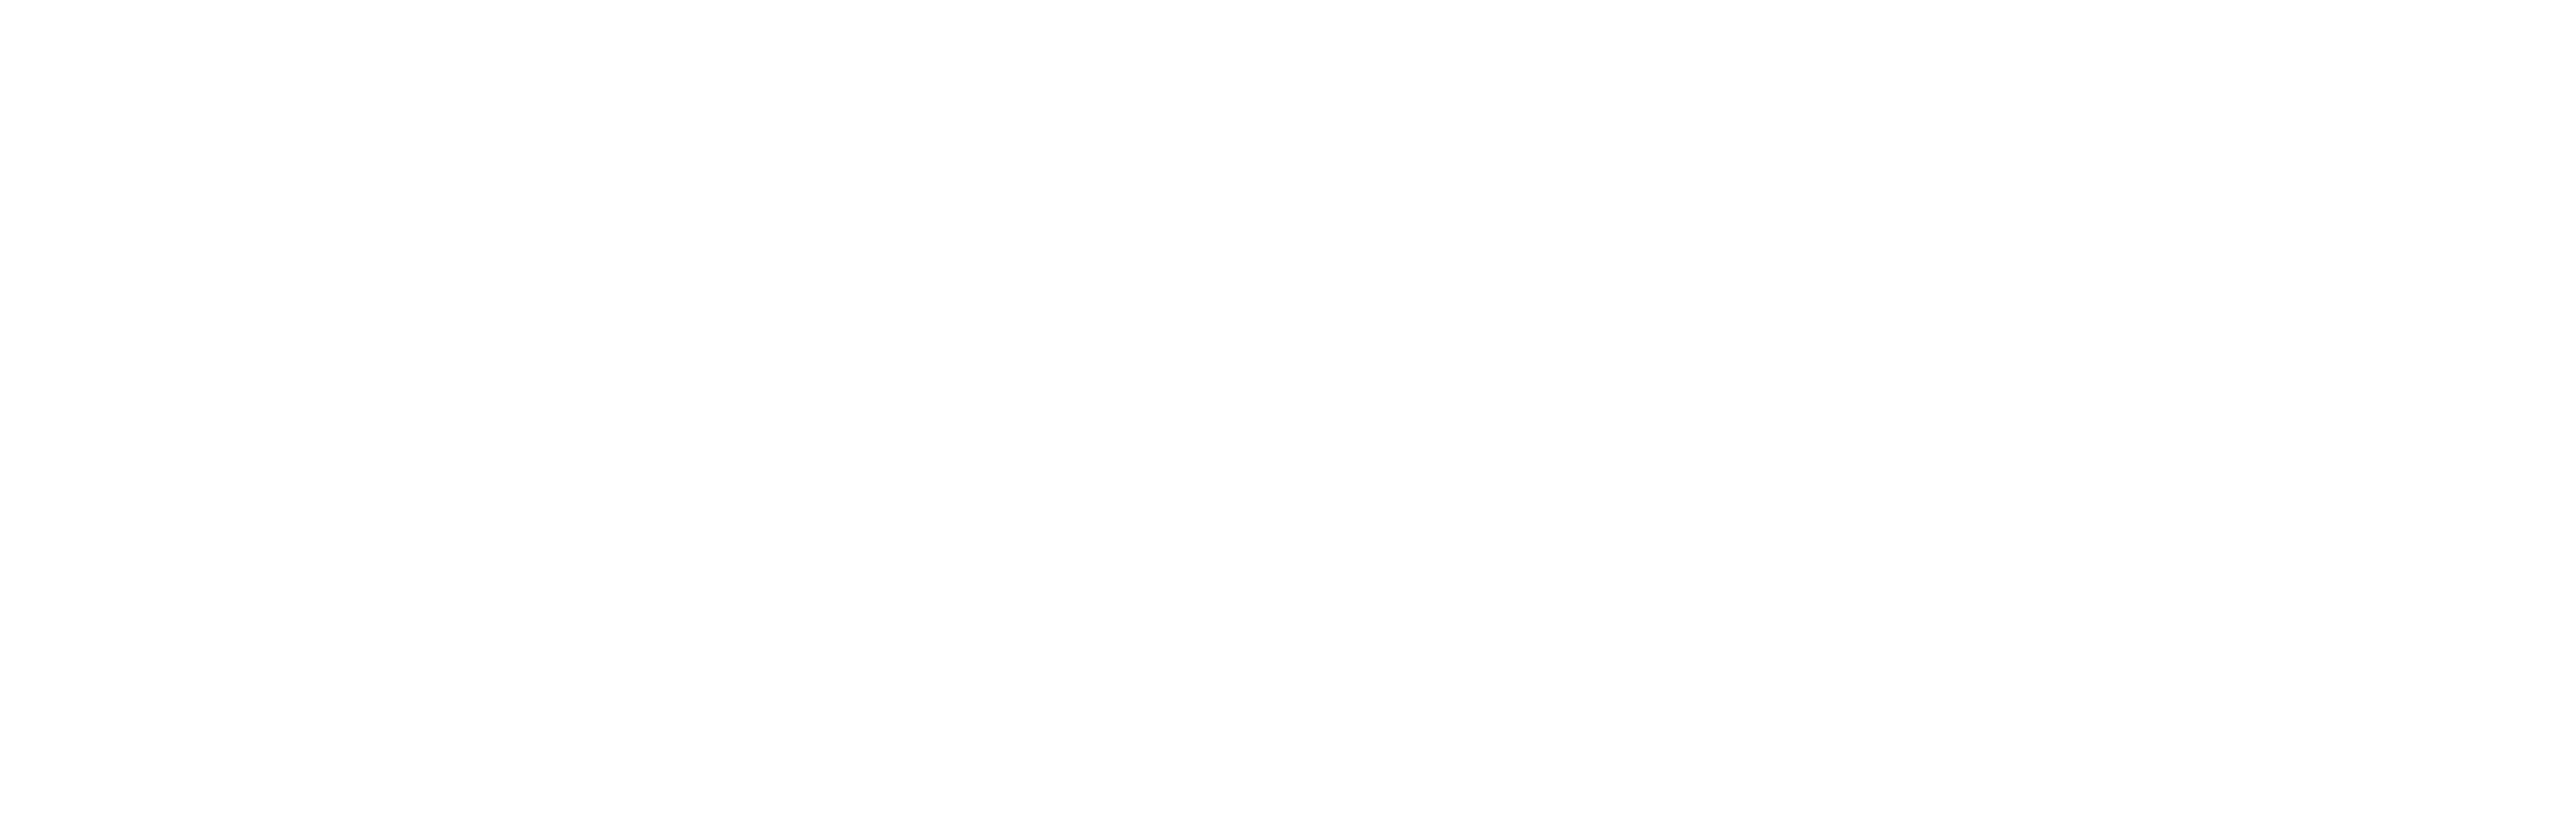 restomanager logo wit